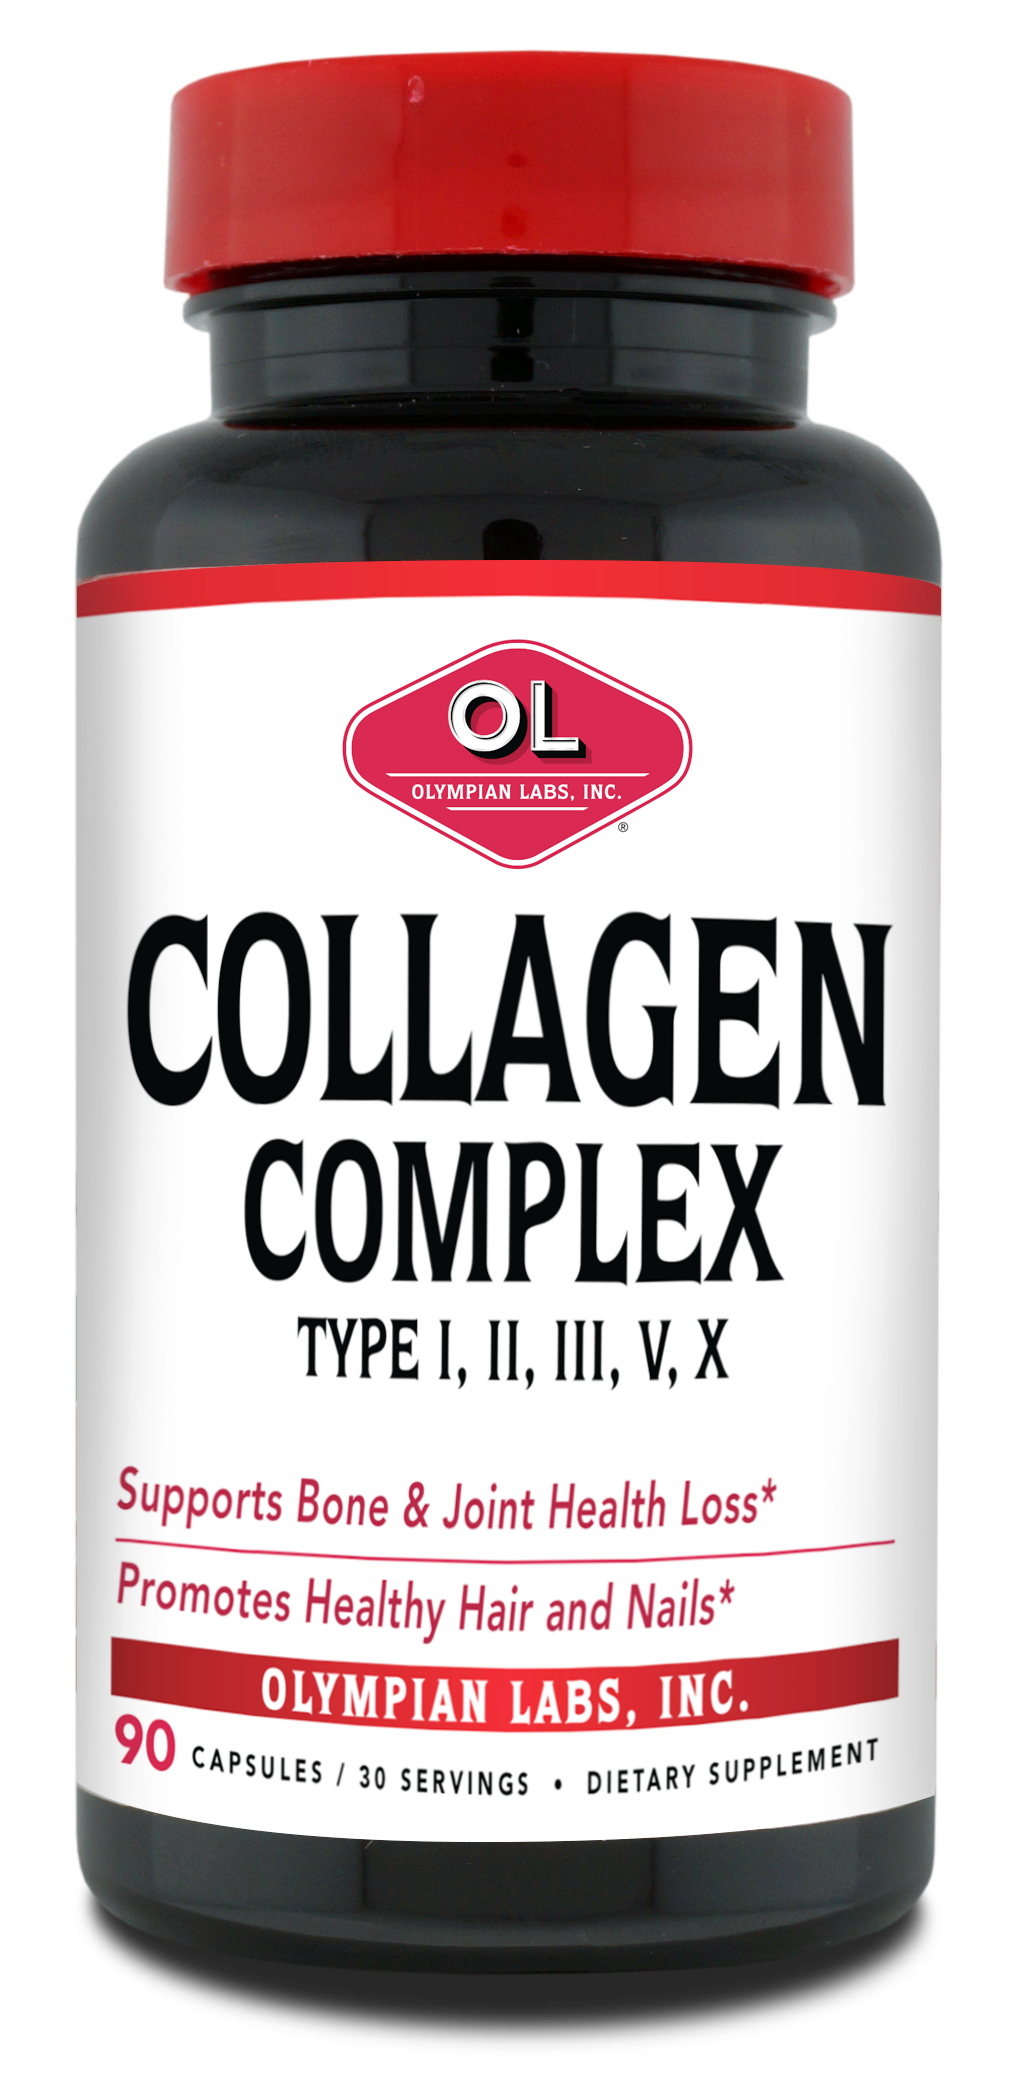 Collagen Complex Type I, II, III, V, X | Olympian Labs